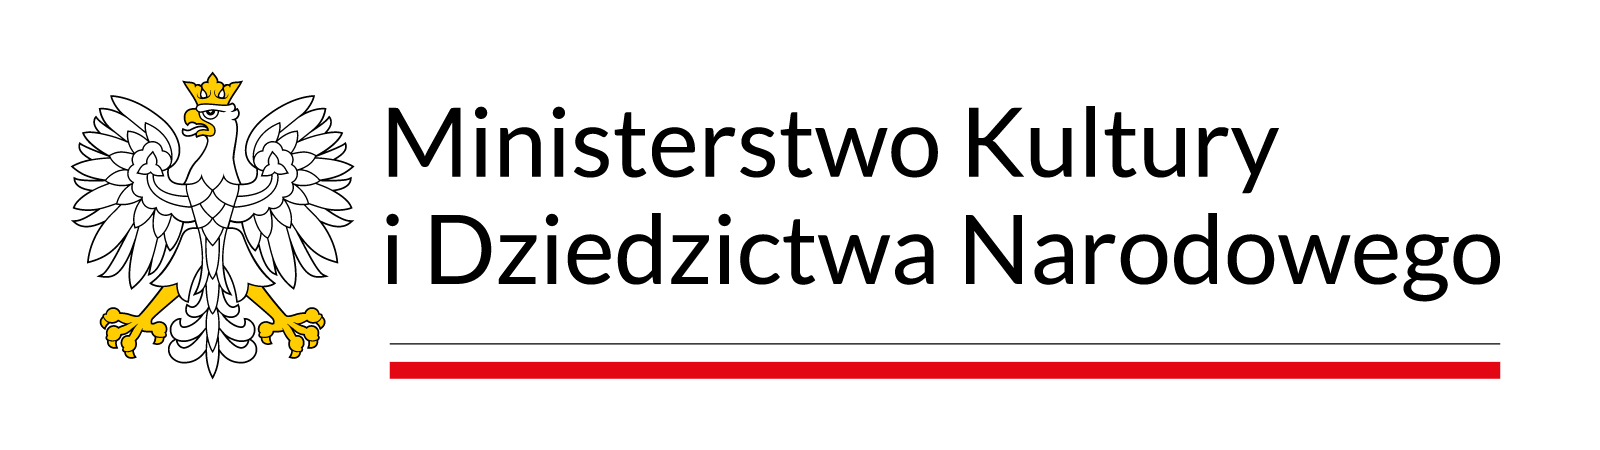 logo Ministrstwa Kultury